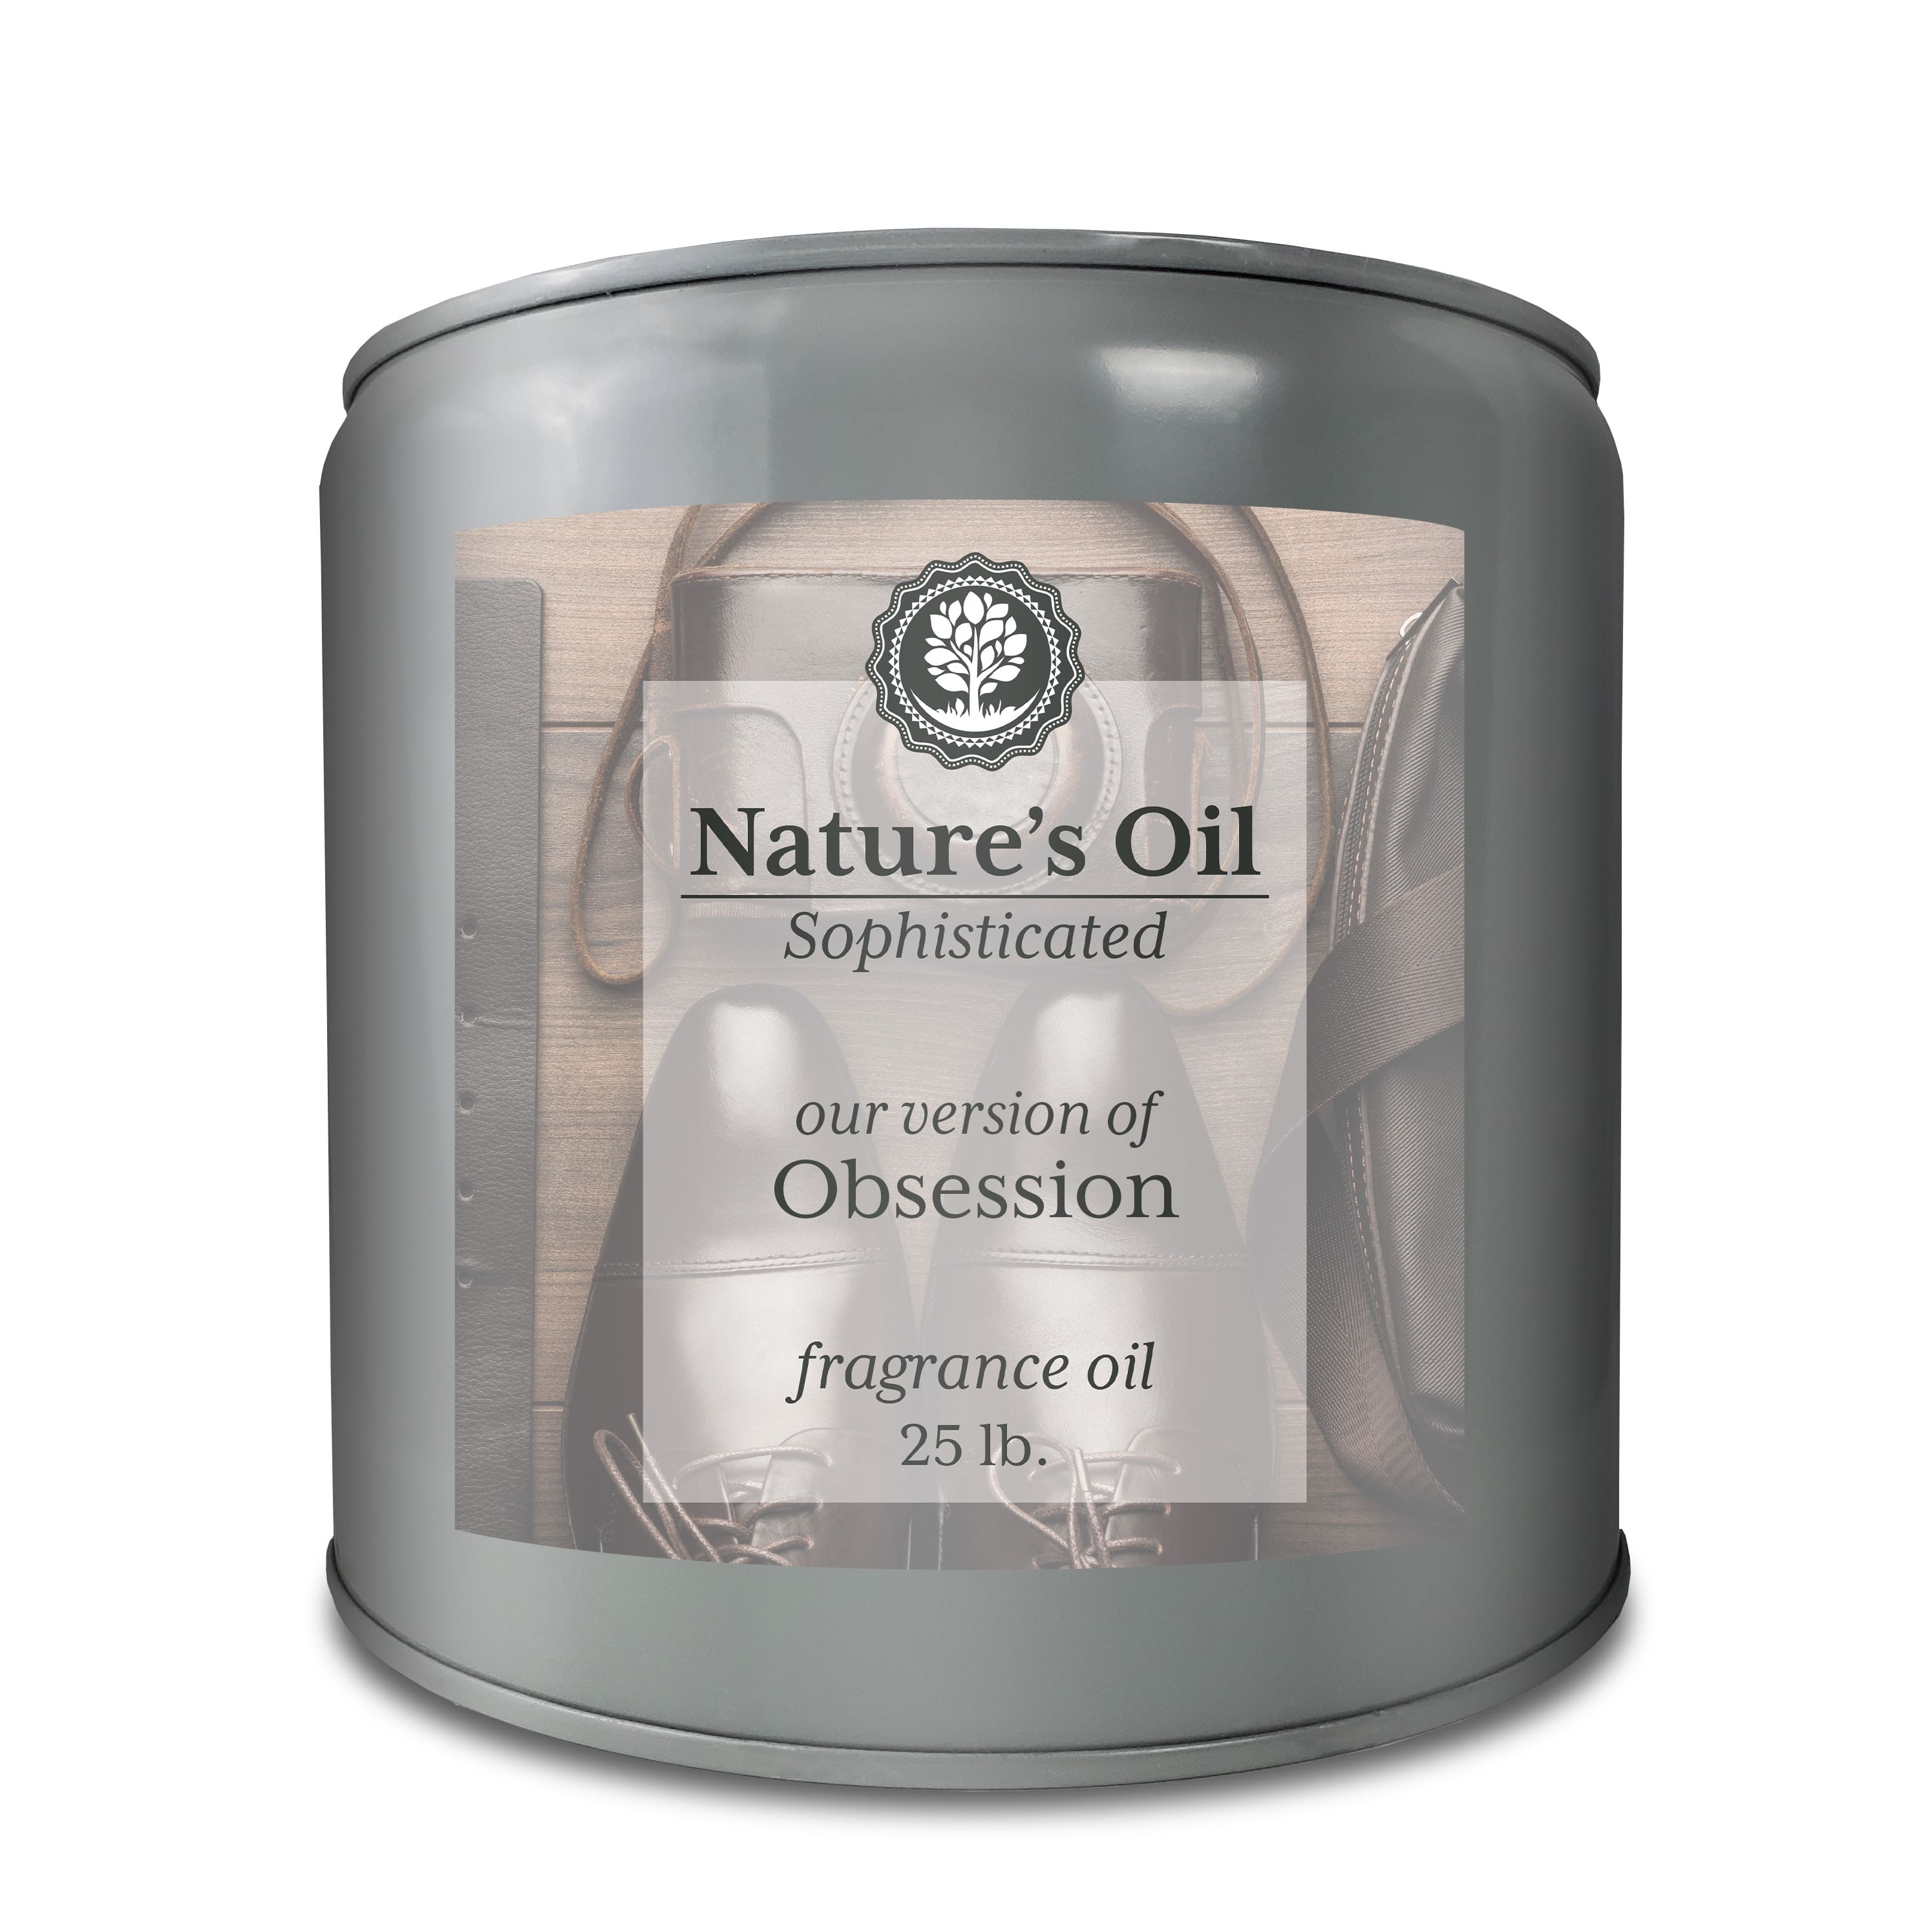 Obsession Fragrance Oil  Nature's Oil Premium Fragrances